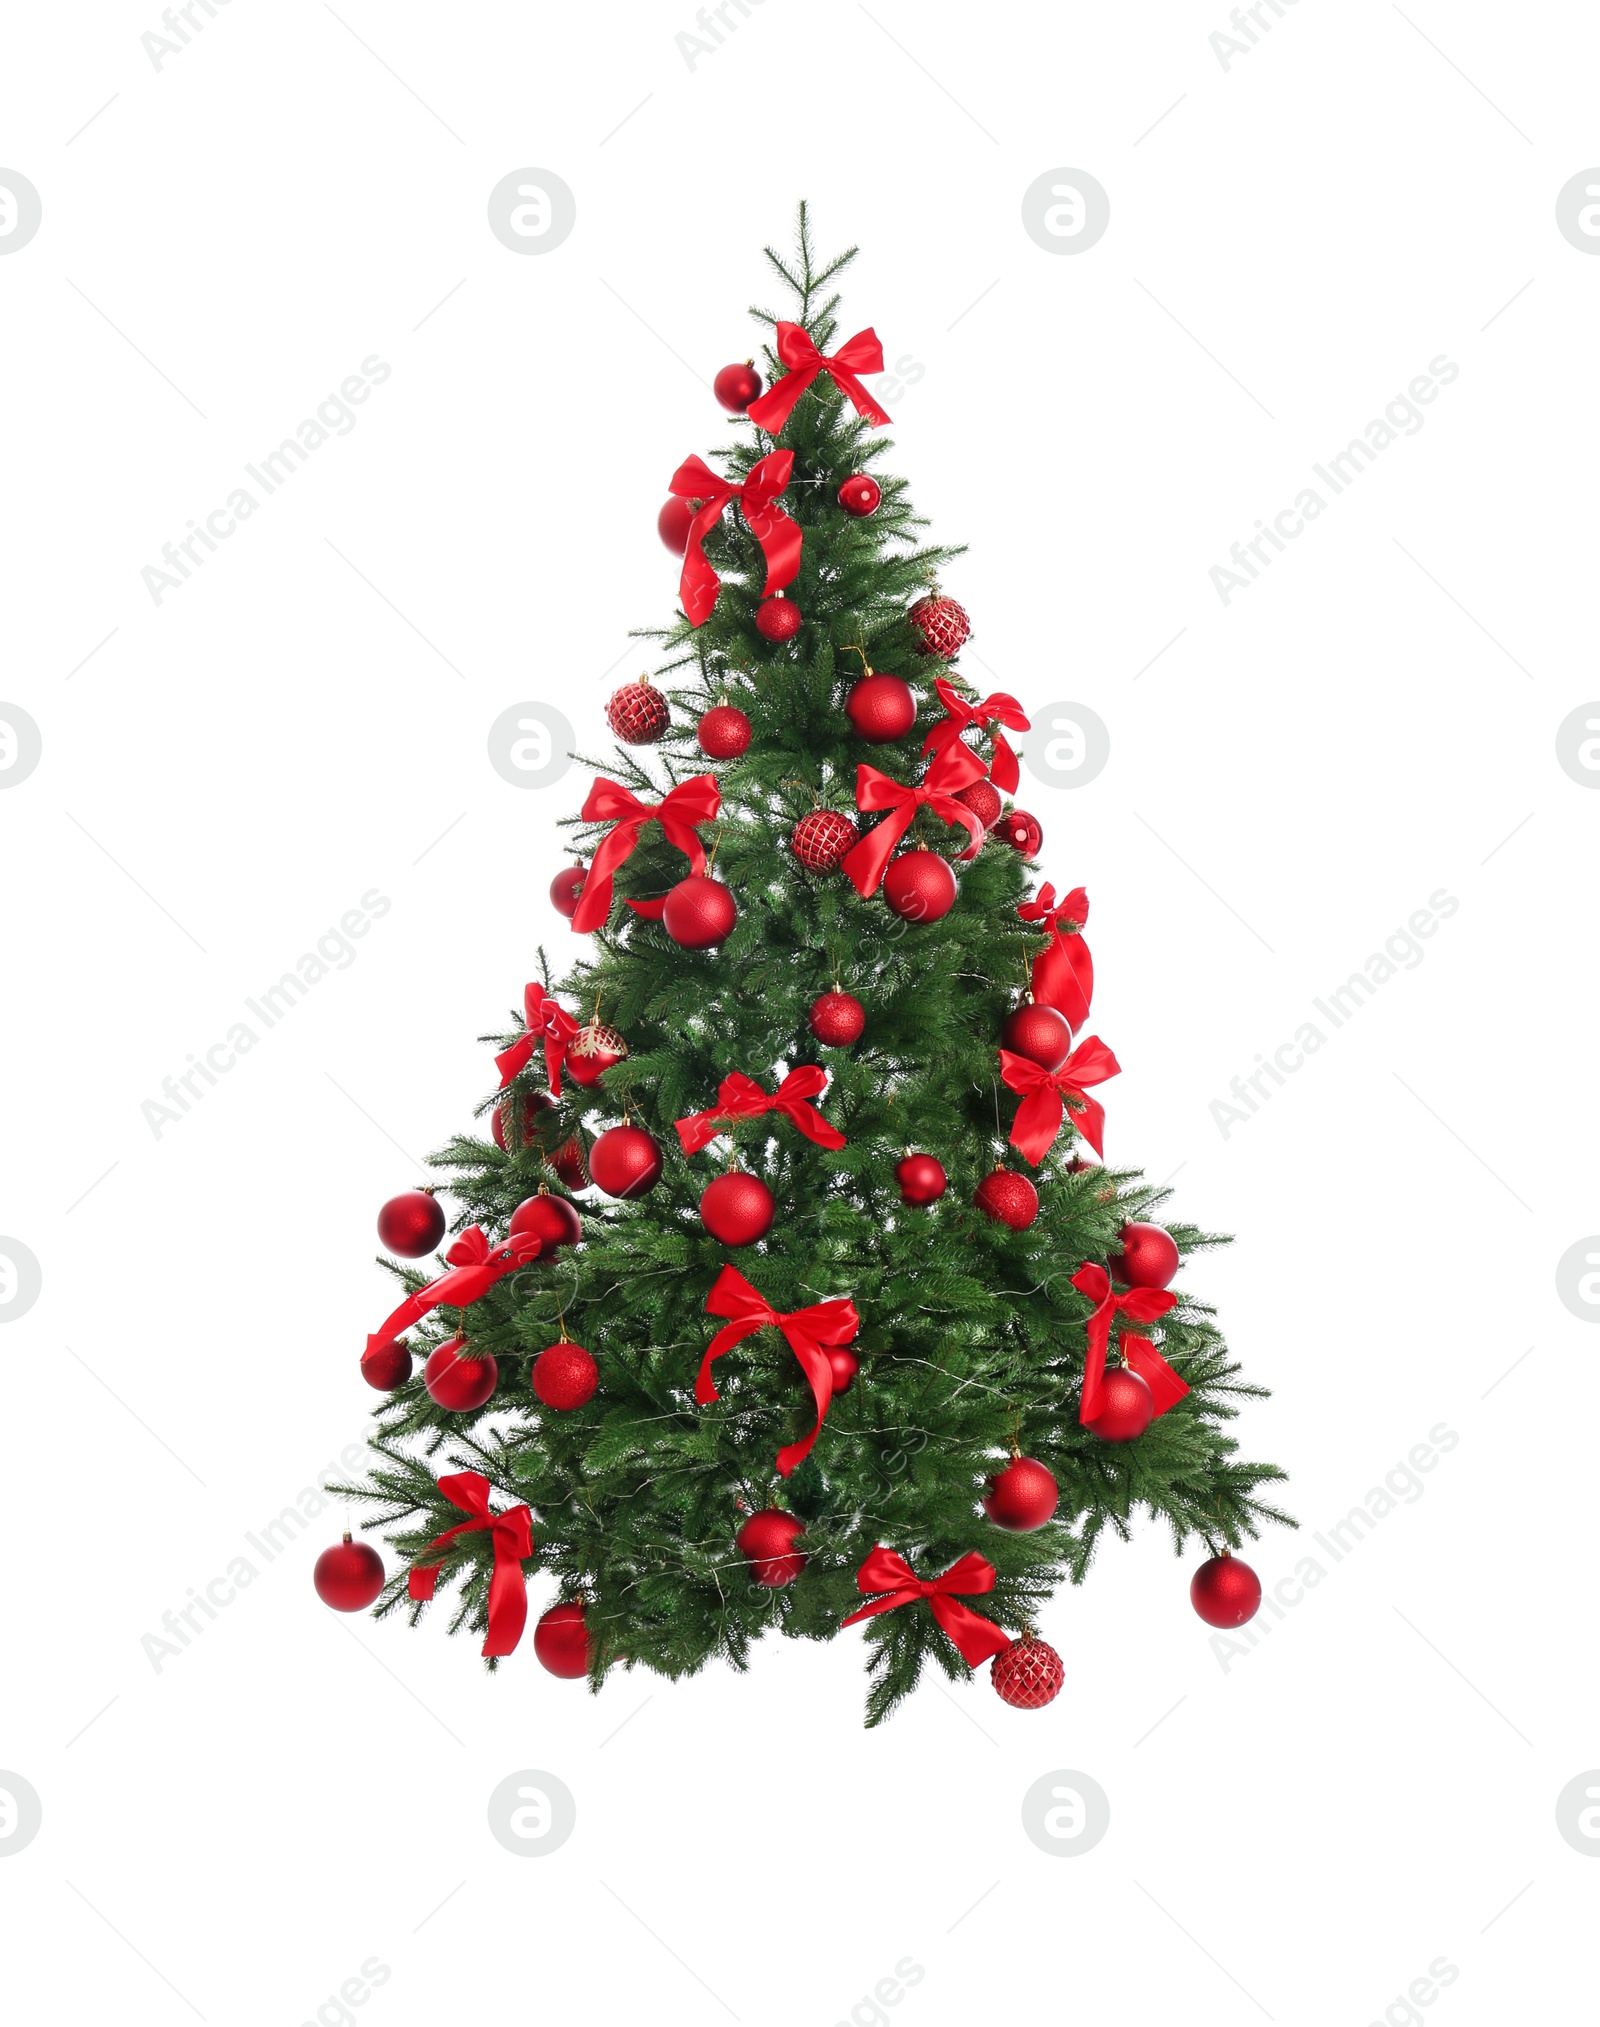 Image of Beautifully decorated Christmas tree on white background